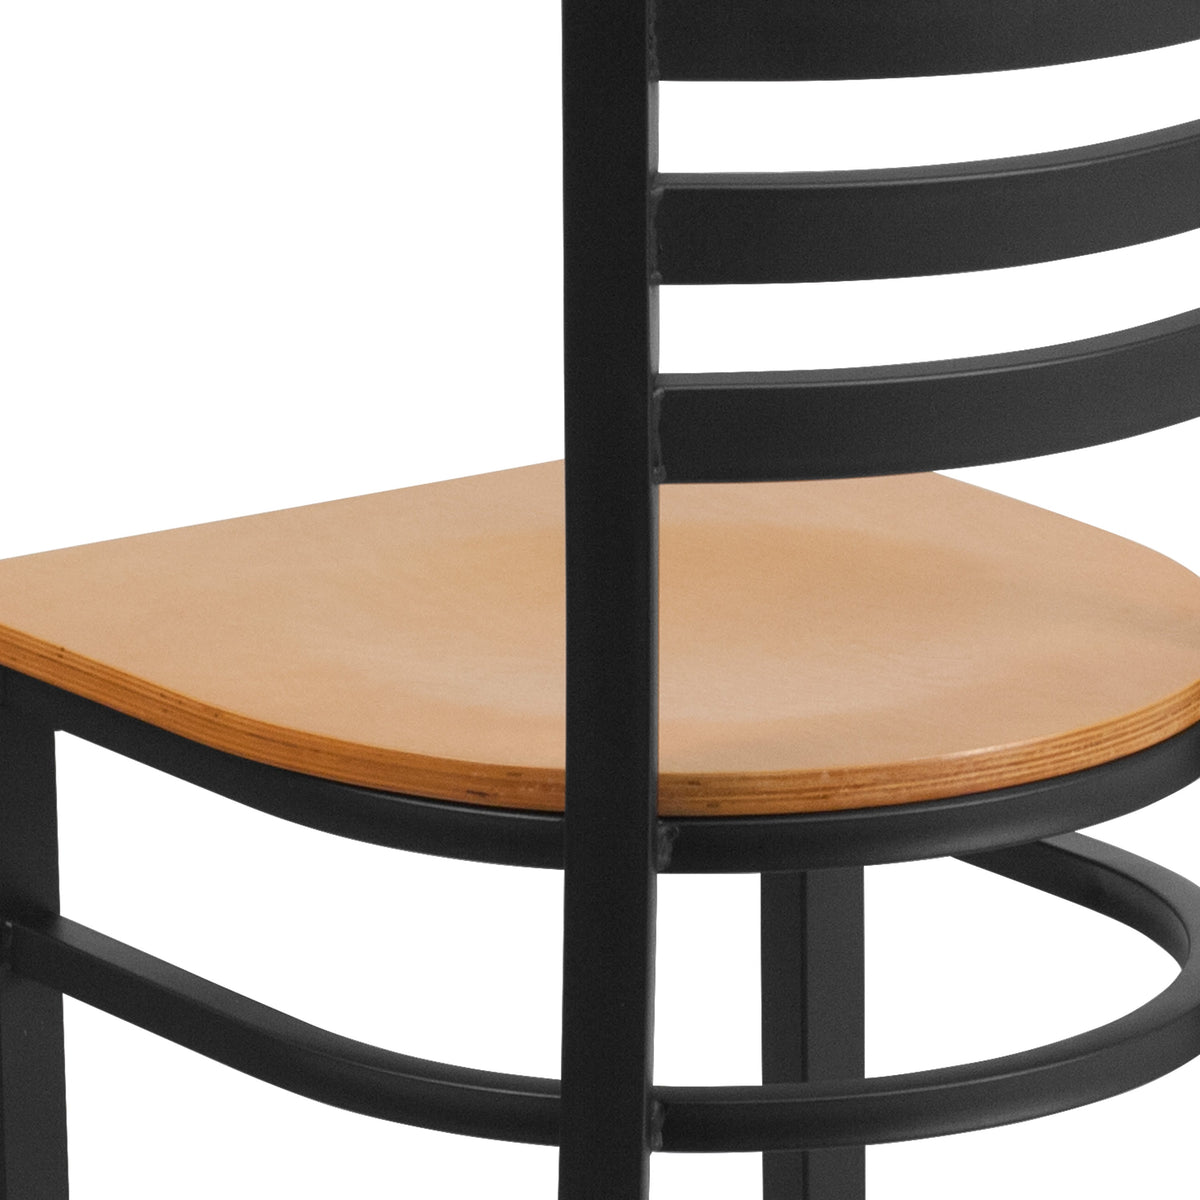 Natural Wood Seat/Black Metal Frame |#| Black Ladder Back Metal Restaurant Chair - Natural Wood Seat